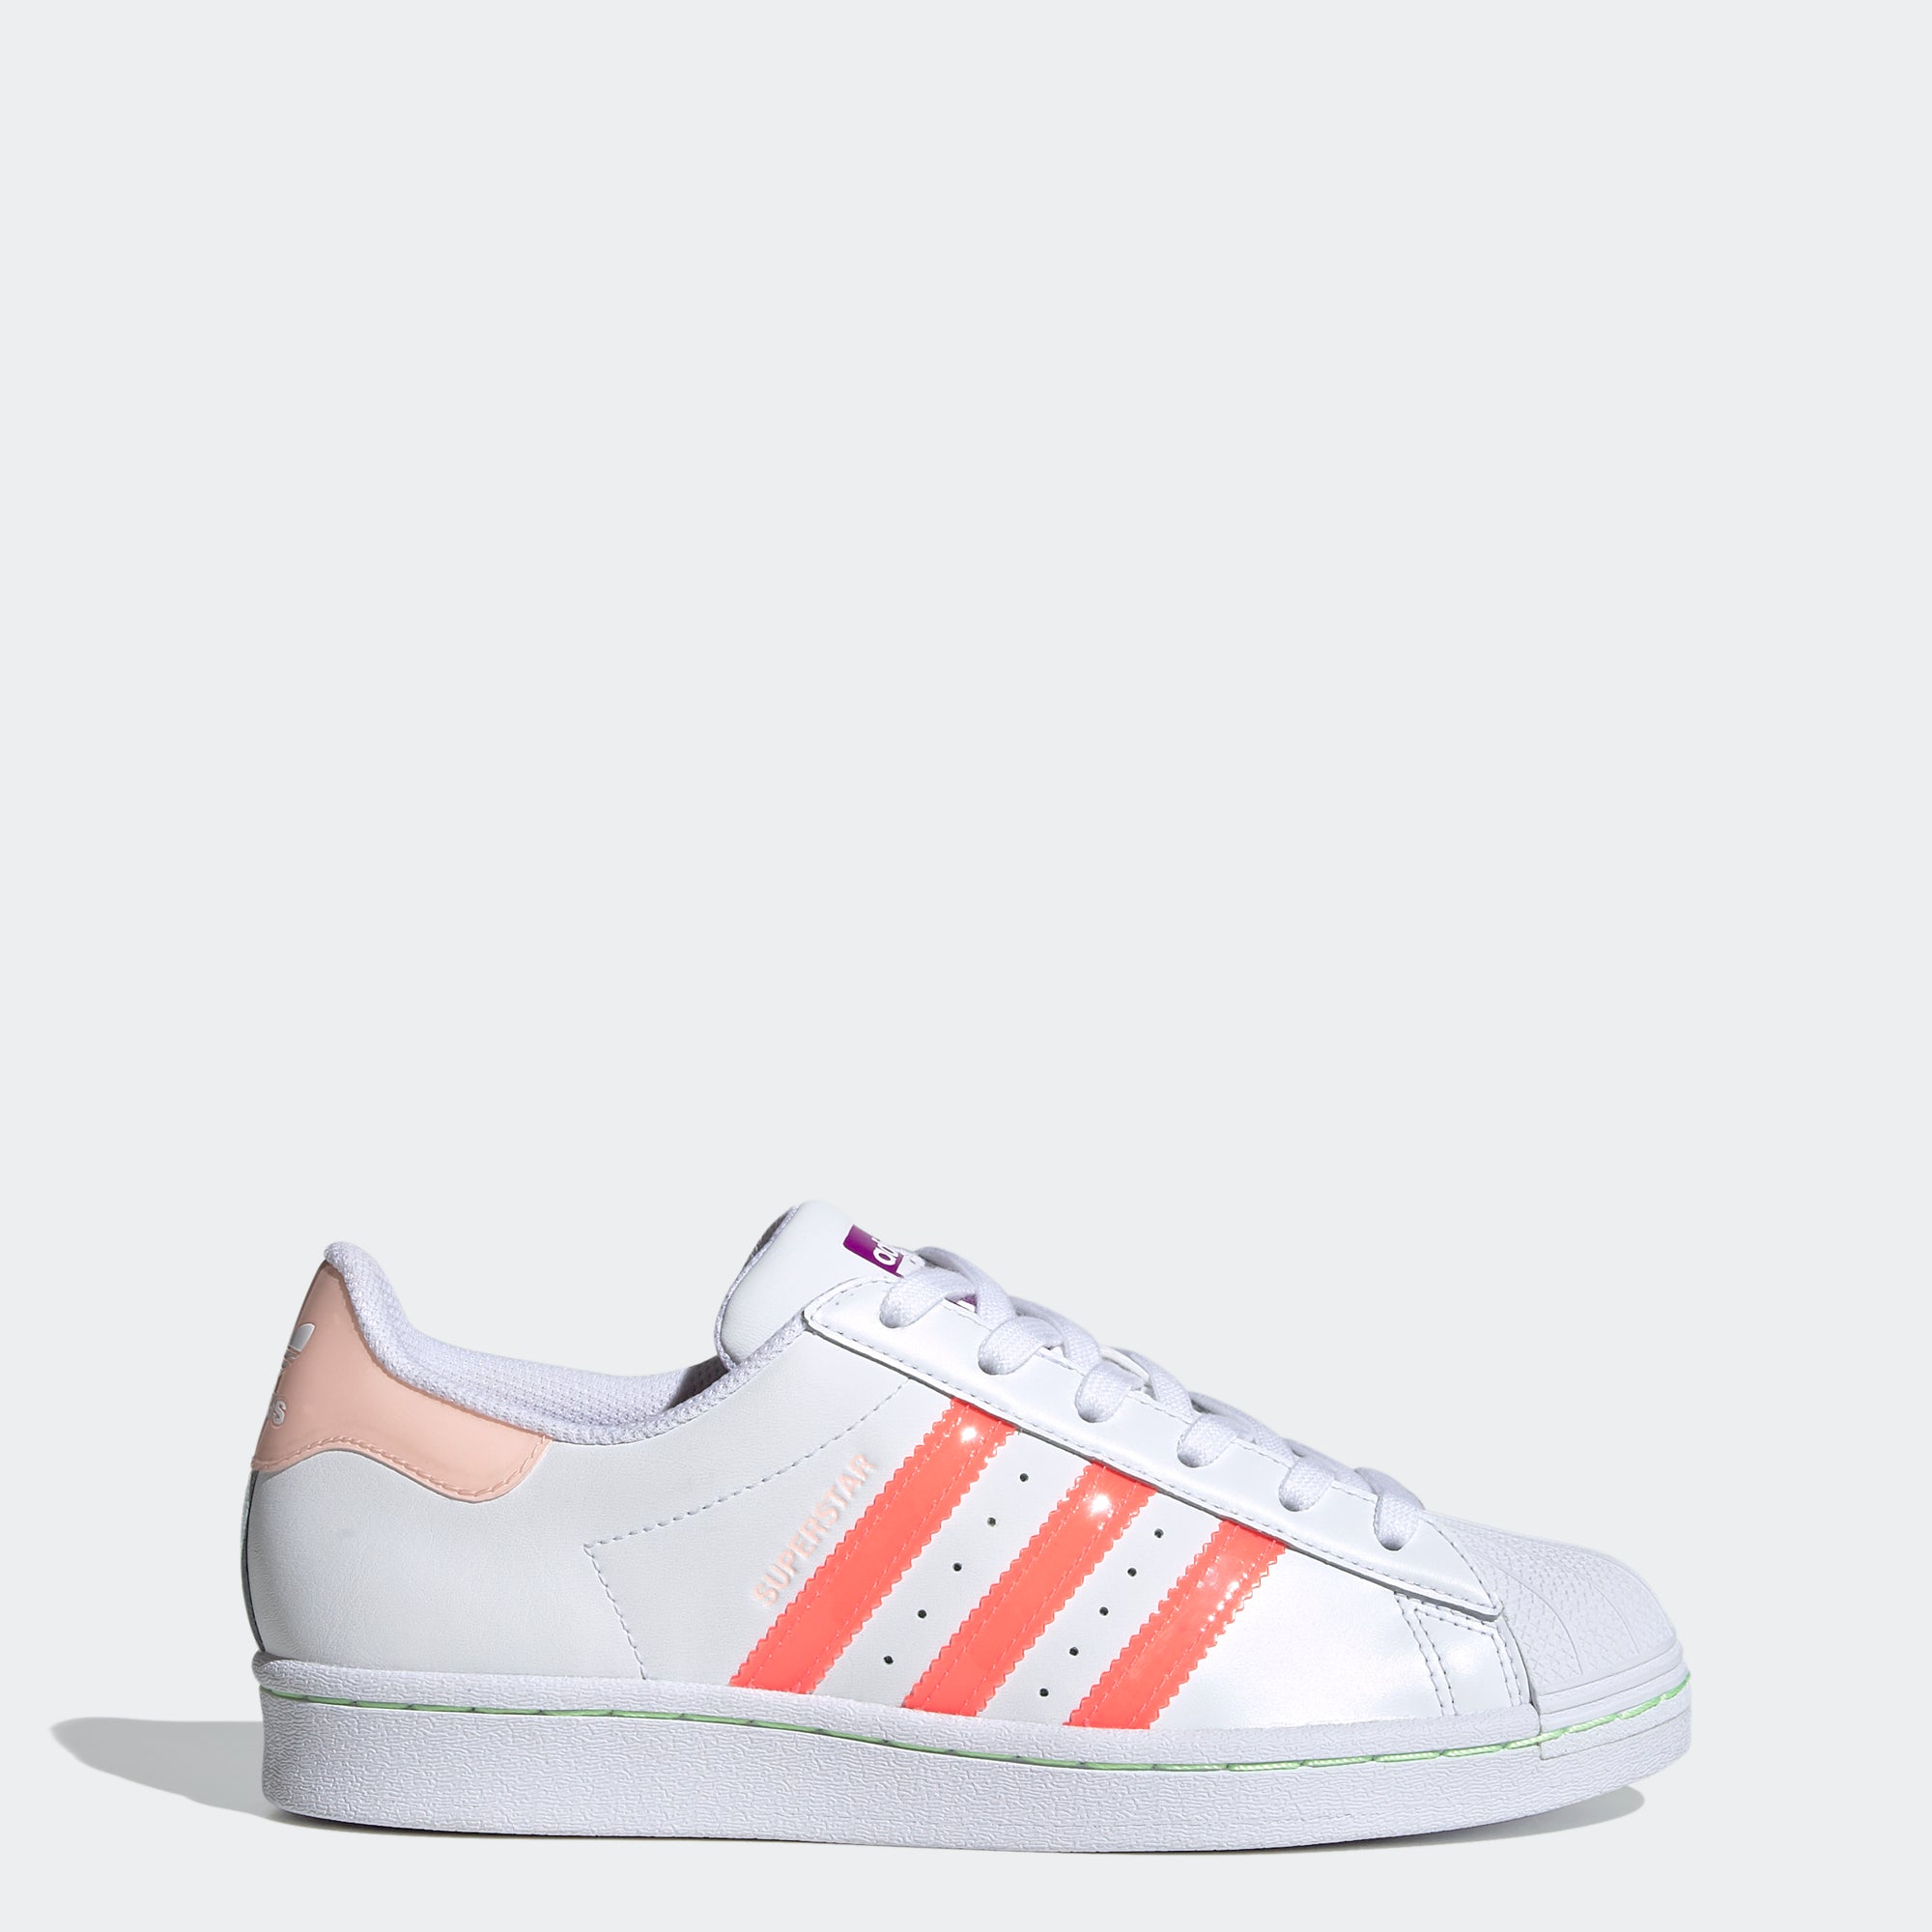 adidas superstar shoes pink stripe